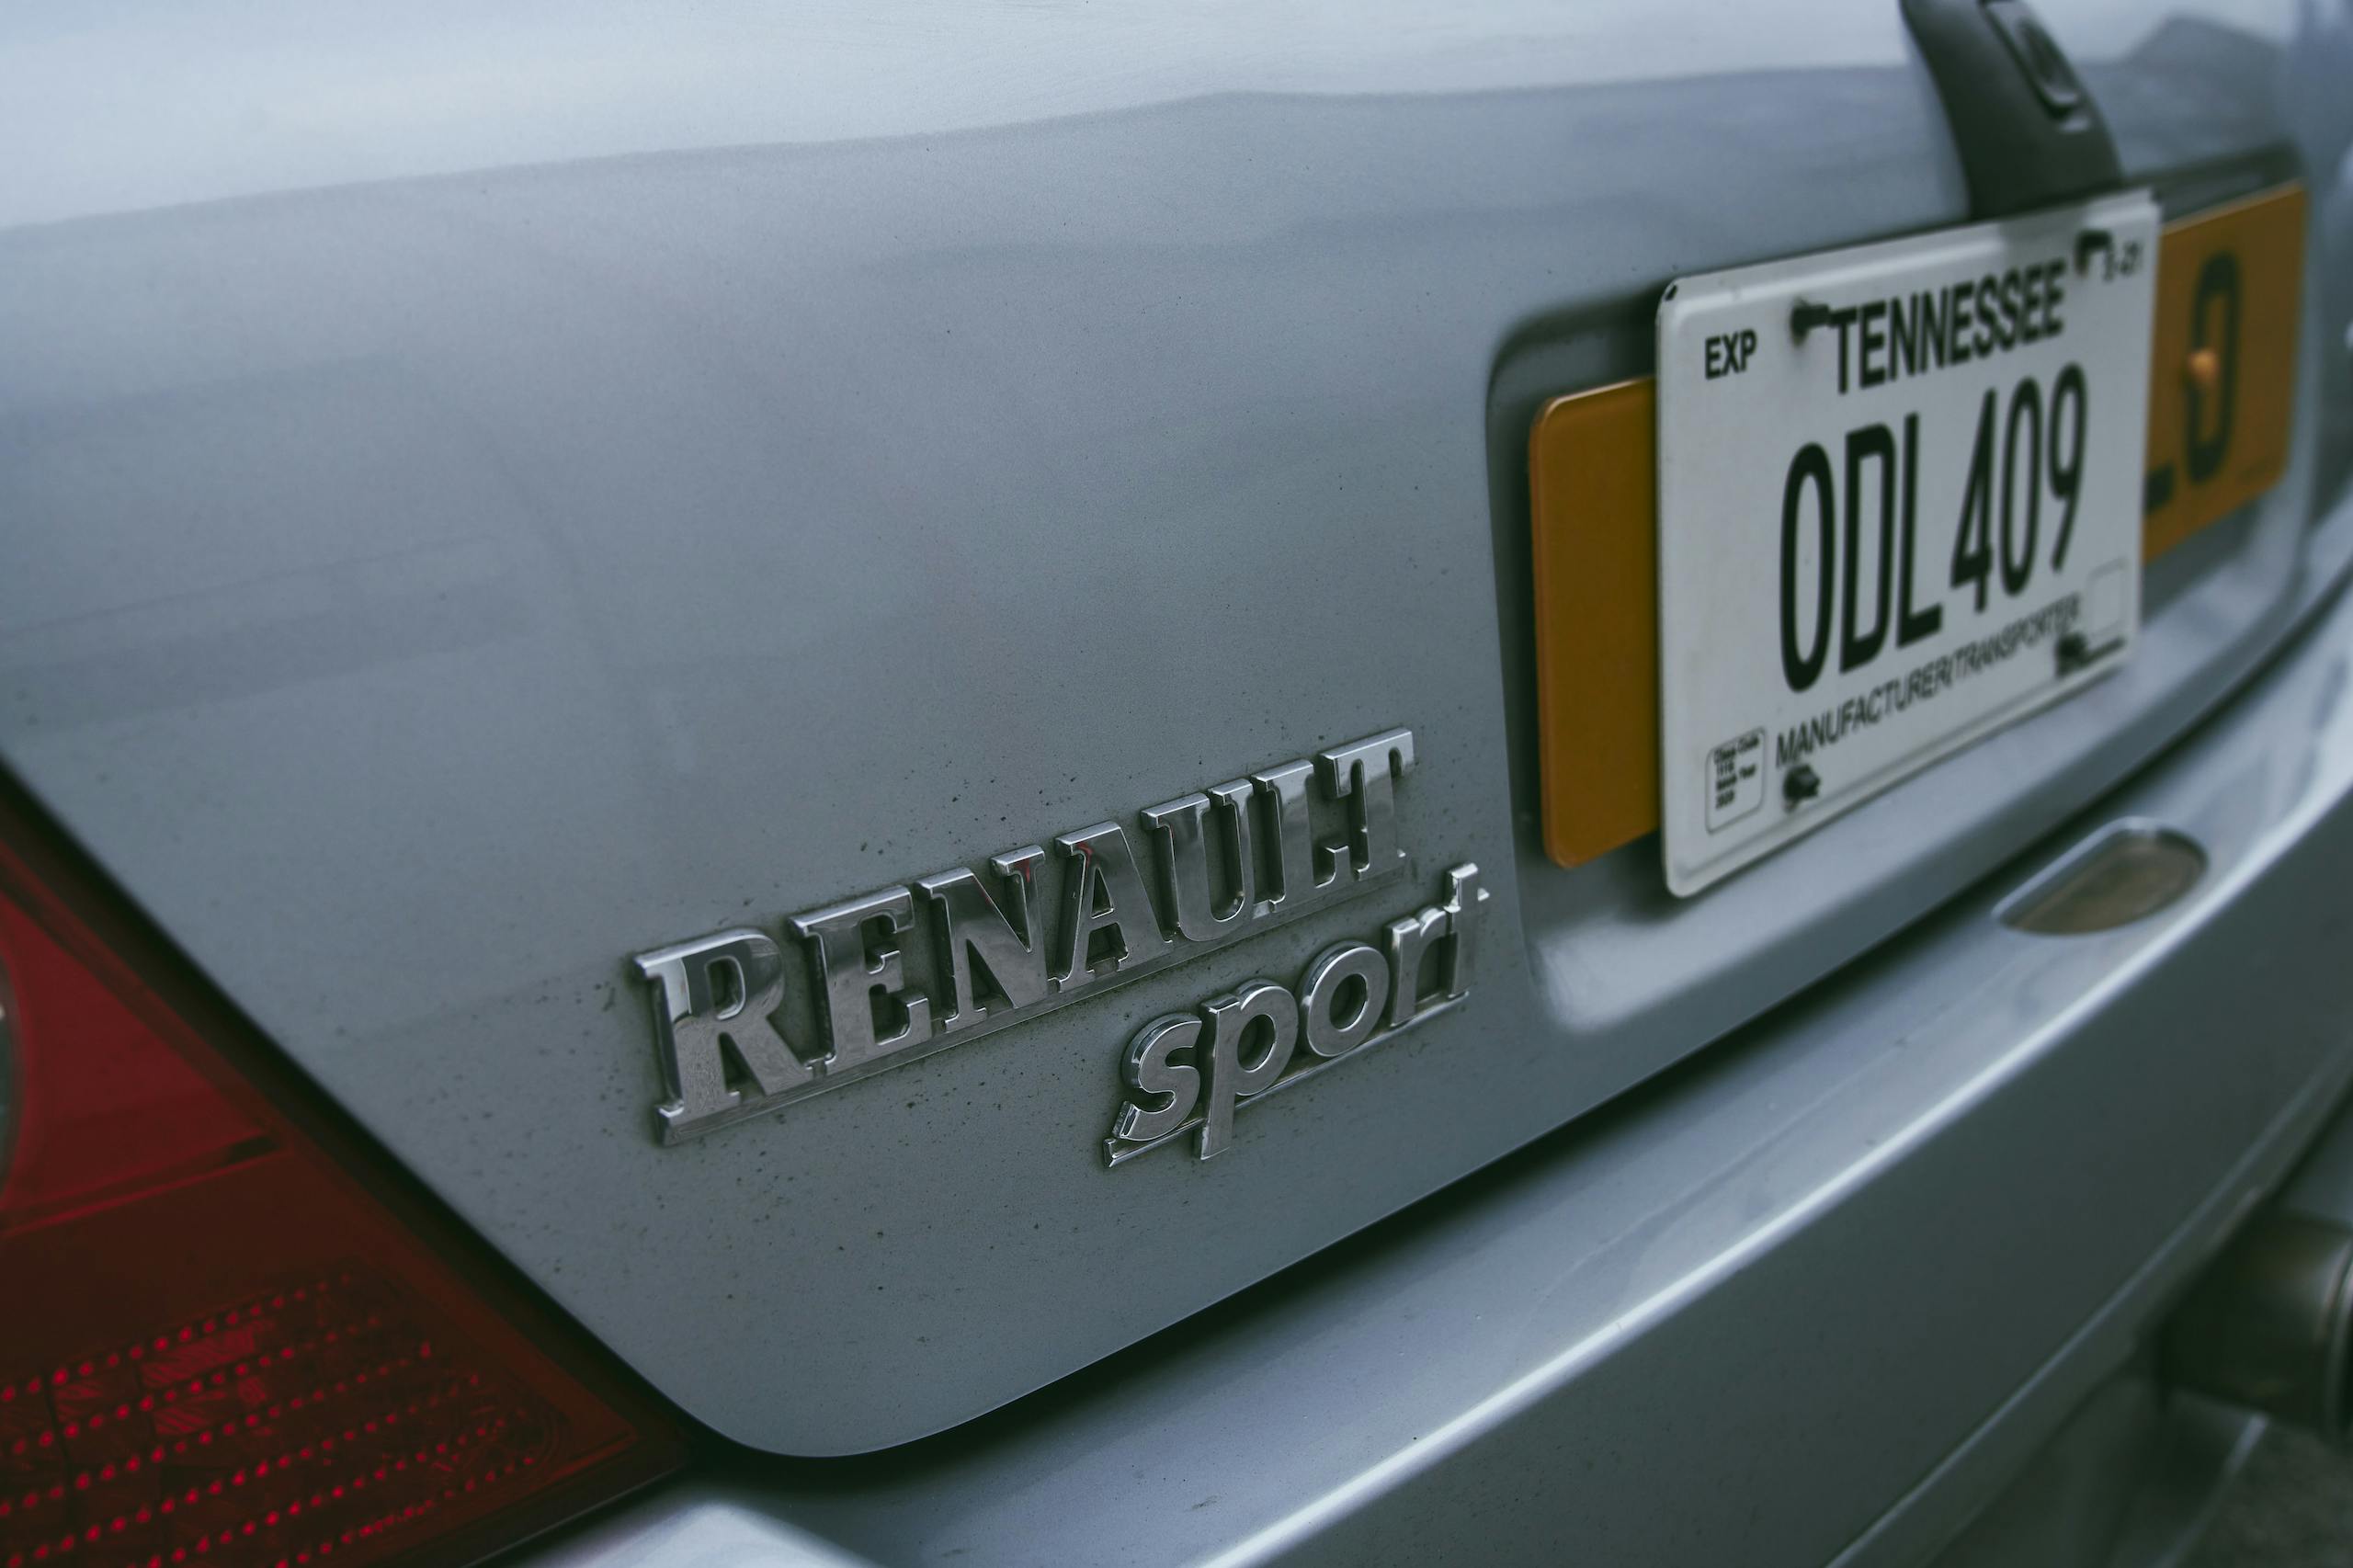 2002 Renault Clio V6 rear badge detail